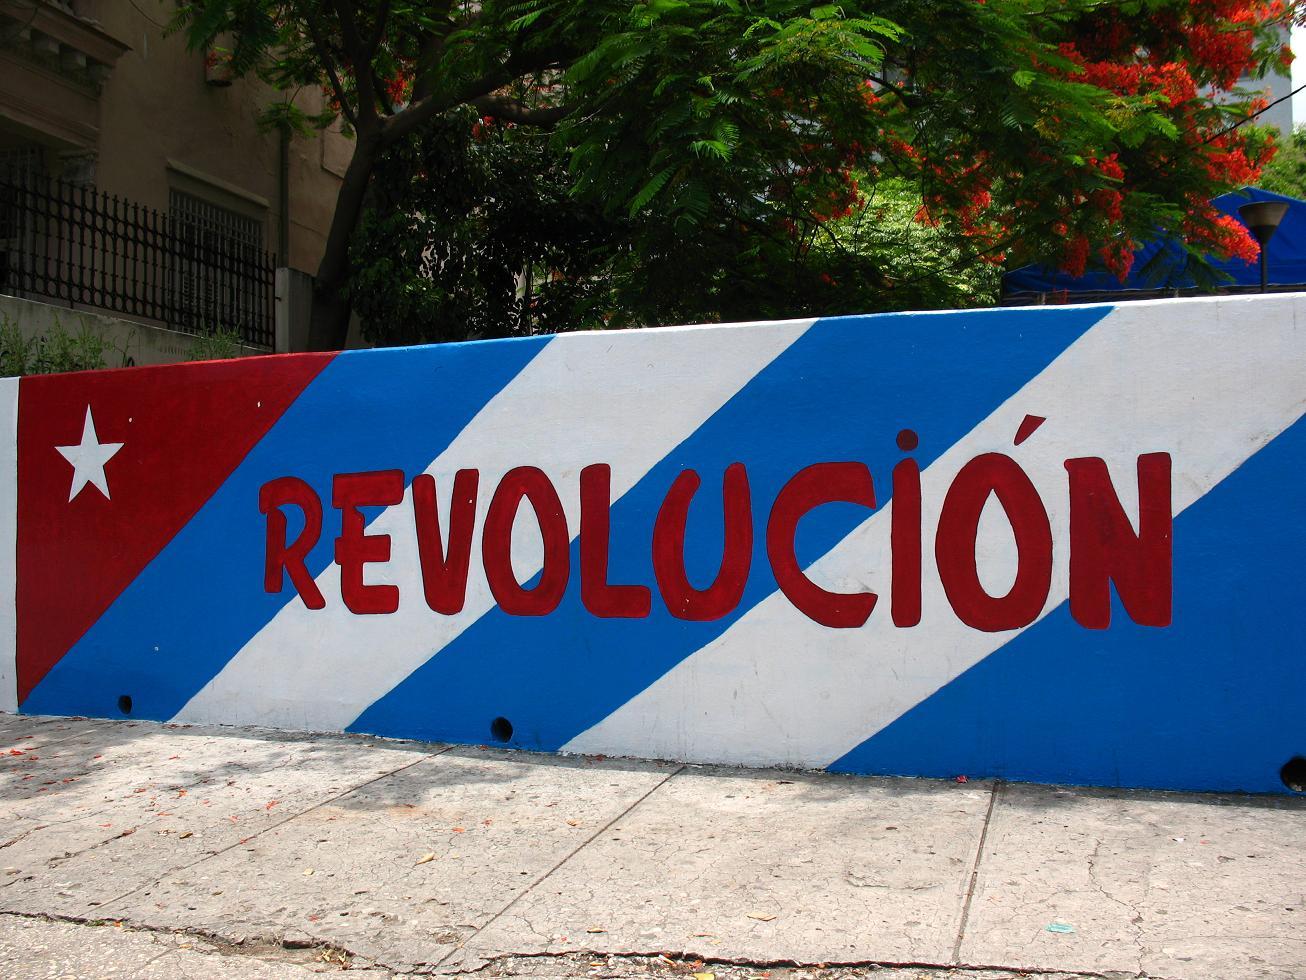 Revolución Cubana Image Elemaki Wikimedia Commons